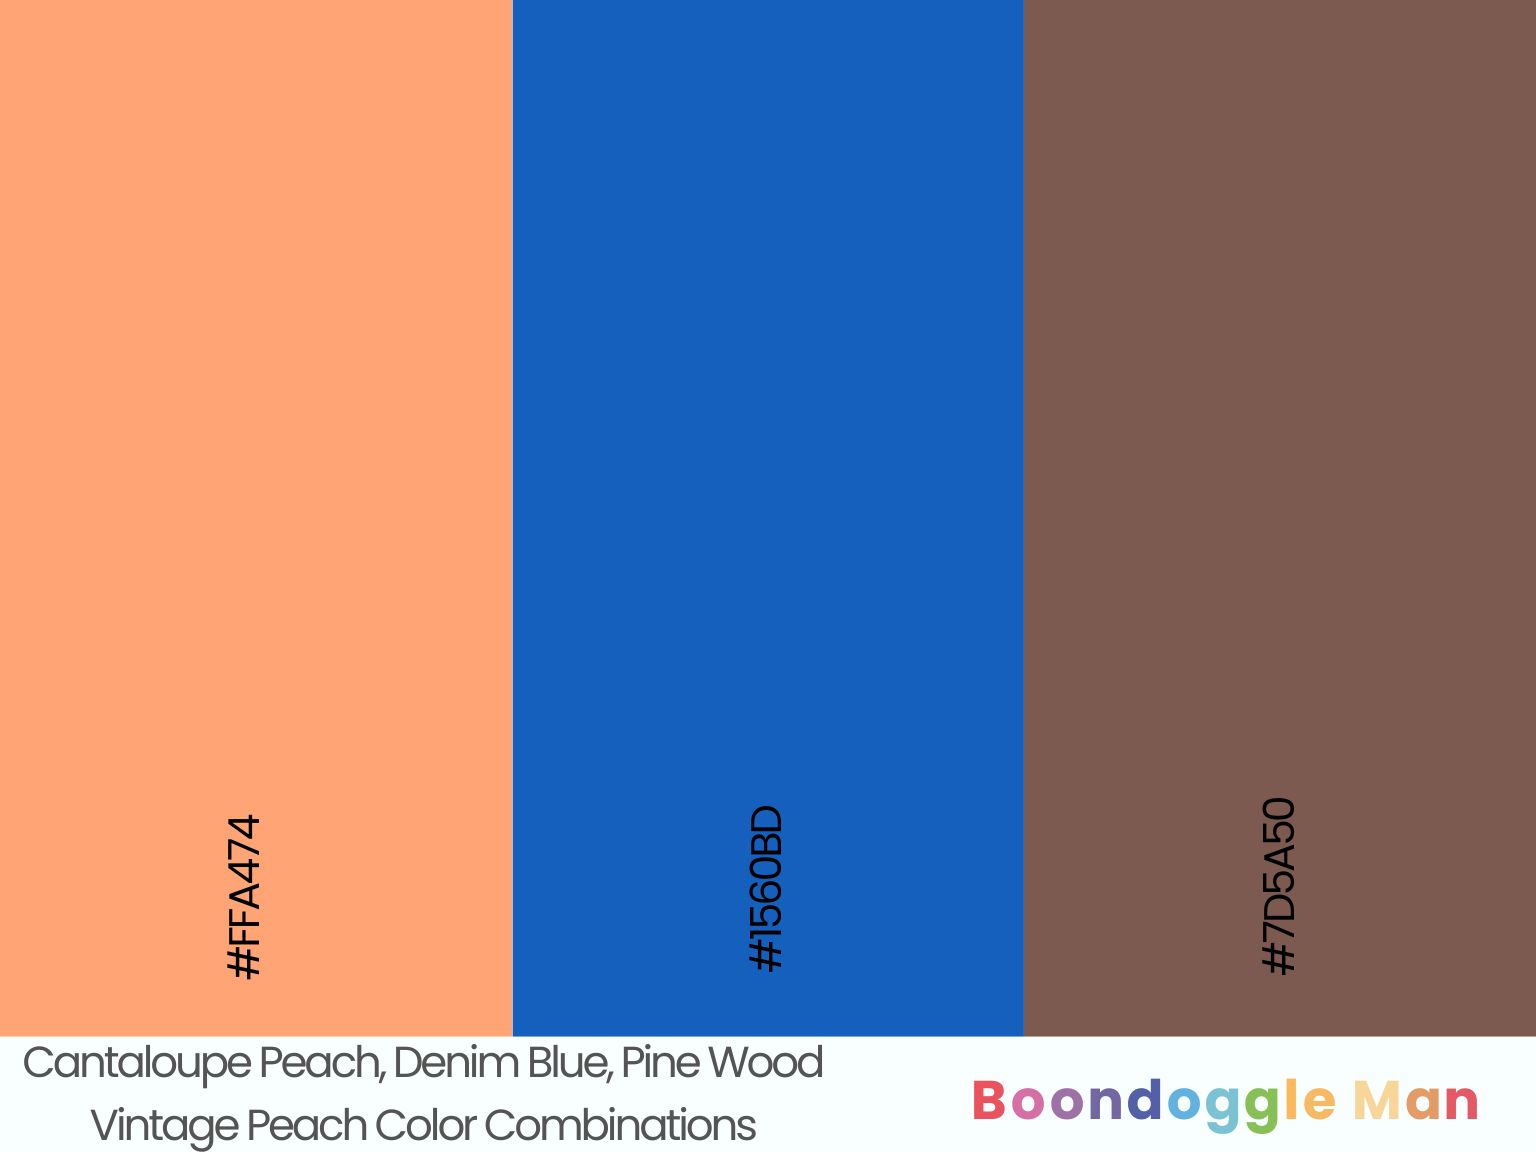 Cantaloupe Peach, Denim Blue, Pine Wood